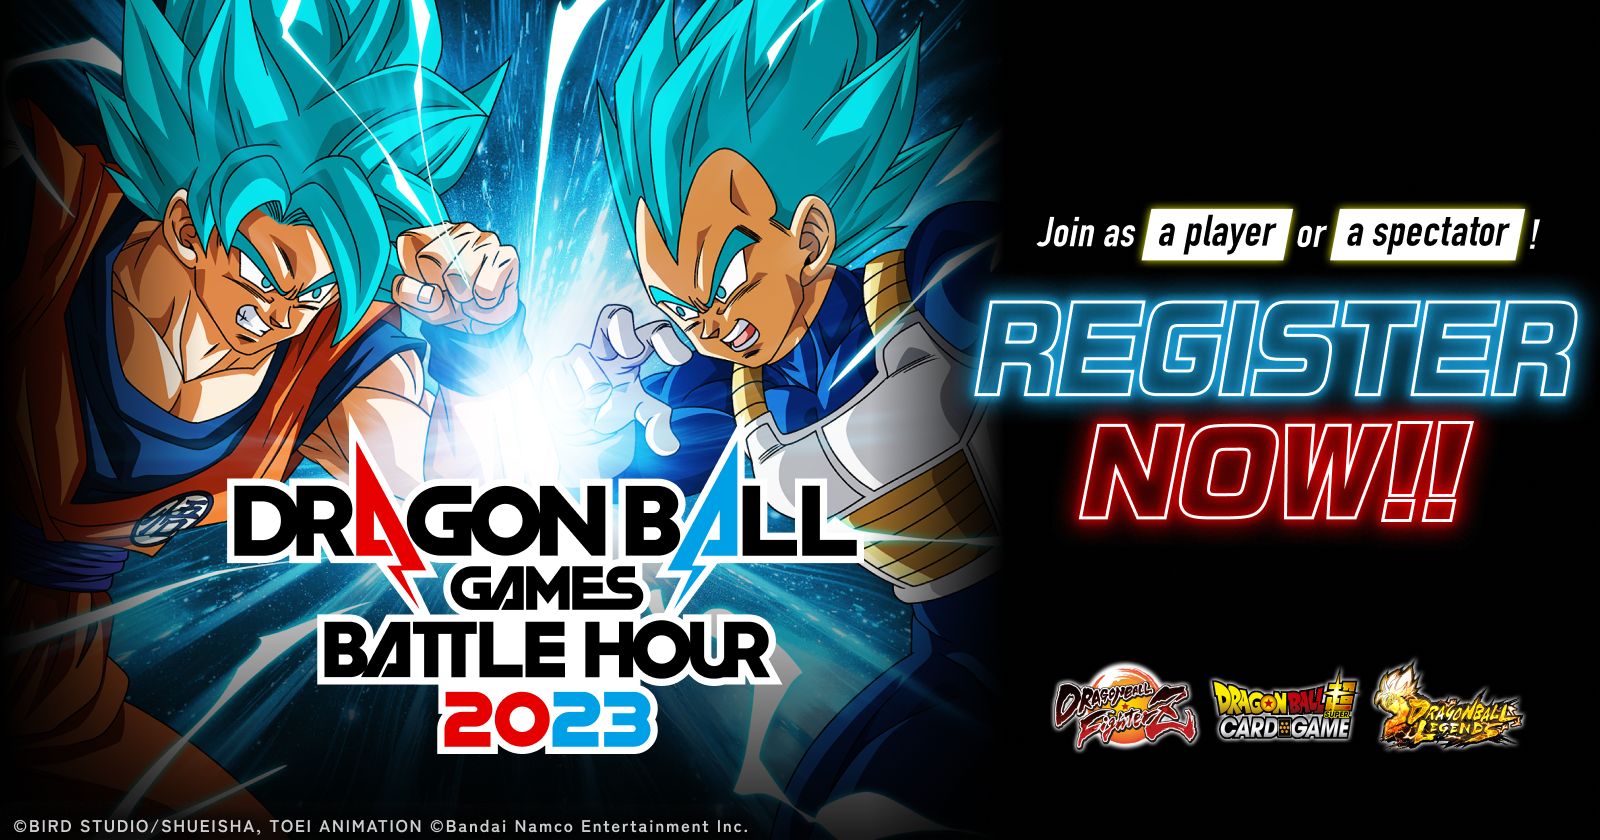 New Info on DRAGON BALL Games Battle Hour 2023!